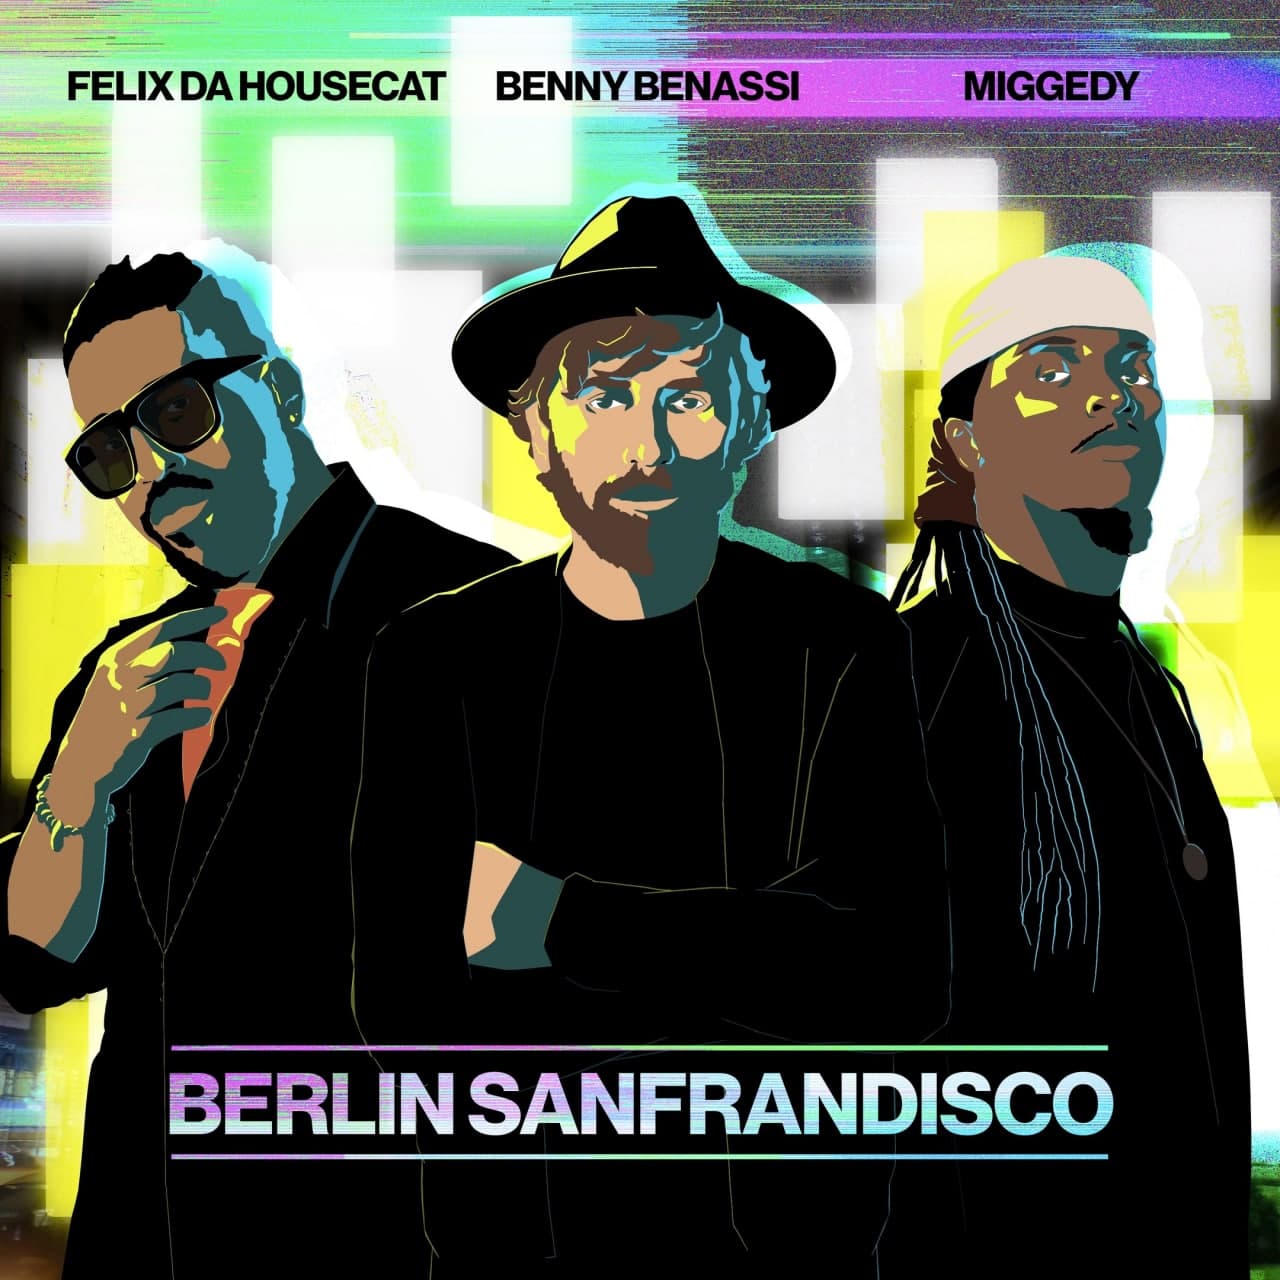 Felix Da Housecat x Benny Benassi x Miggedy - Berlin Sanfrandisco (Extended Mix)